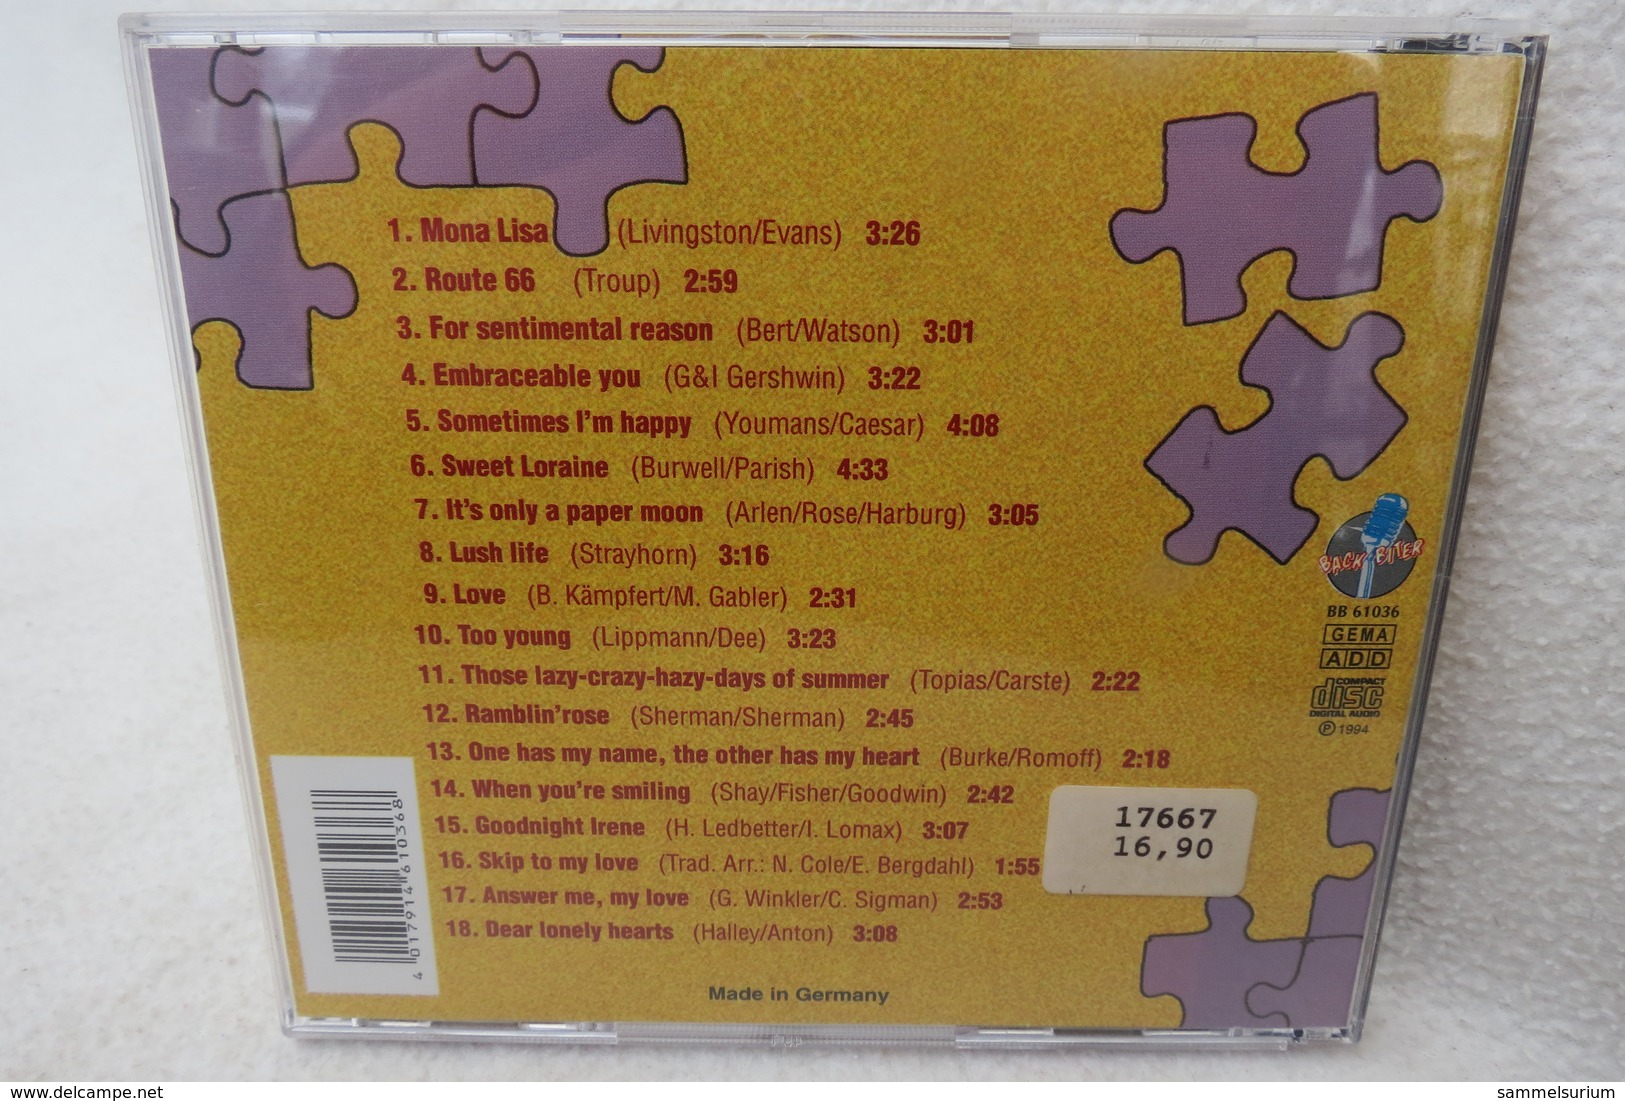 CD "Nat King Cole" Little By Little - Disco, Pop